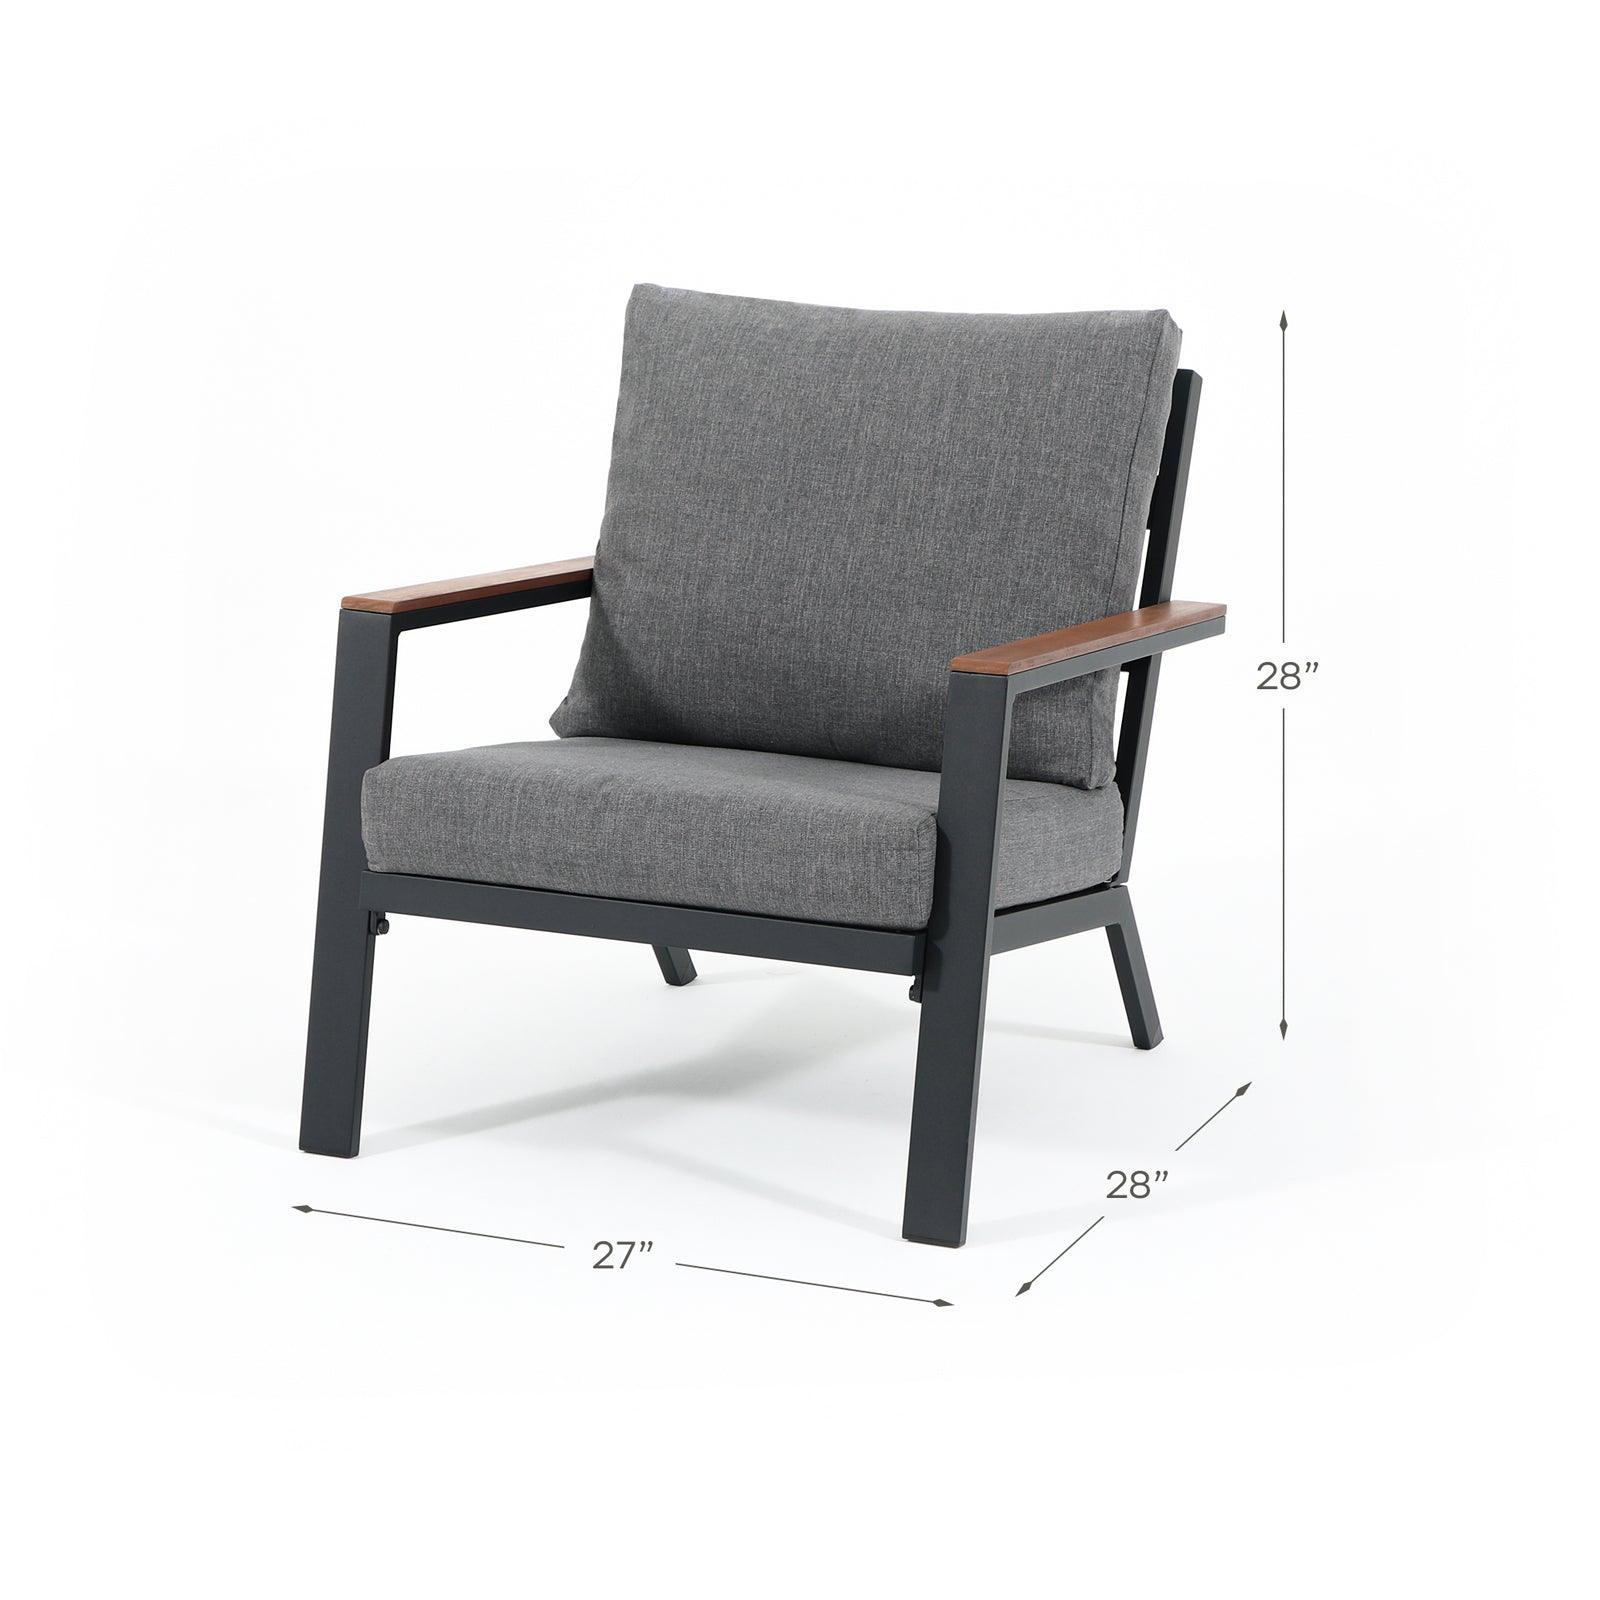 Ronda Grey aluminum outdoor lounge chair  with wood design, grey cushions, wood finish armrest, Dimension information- Jardina Furniture